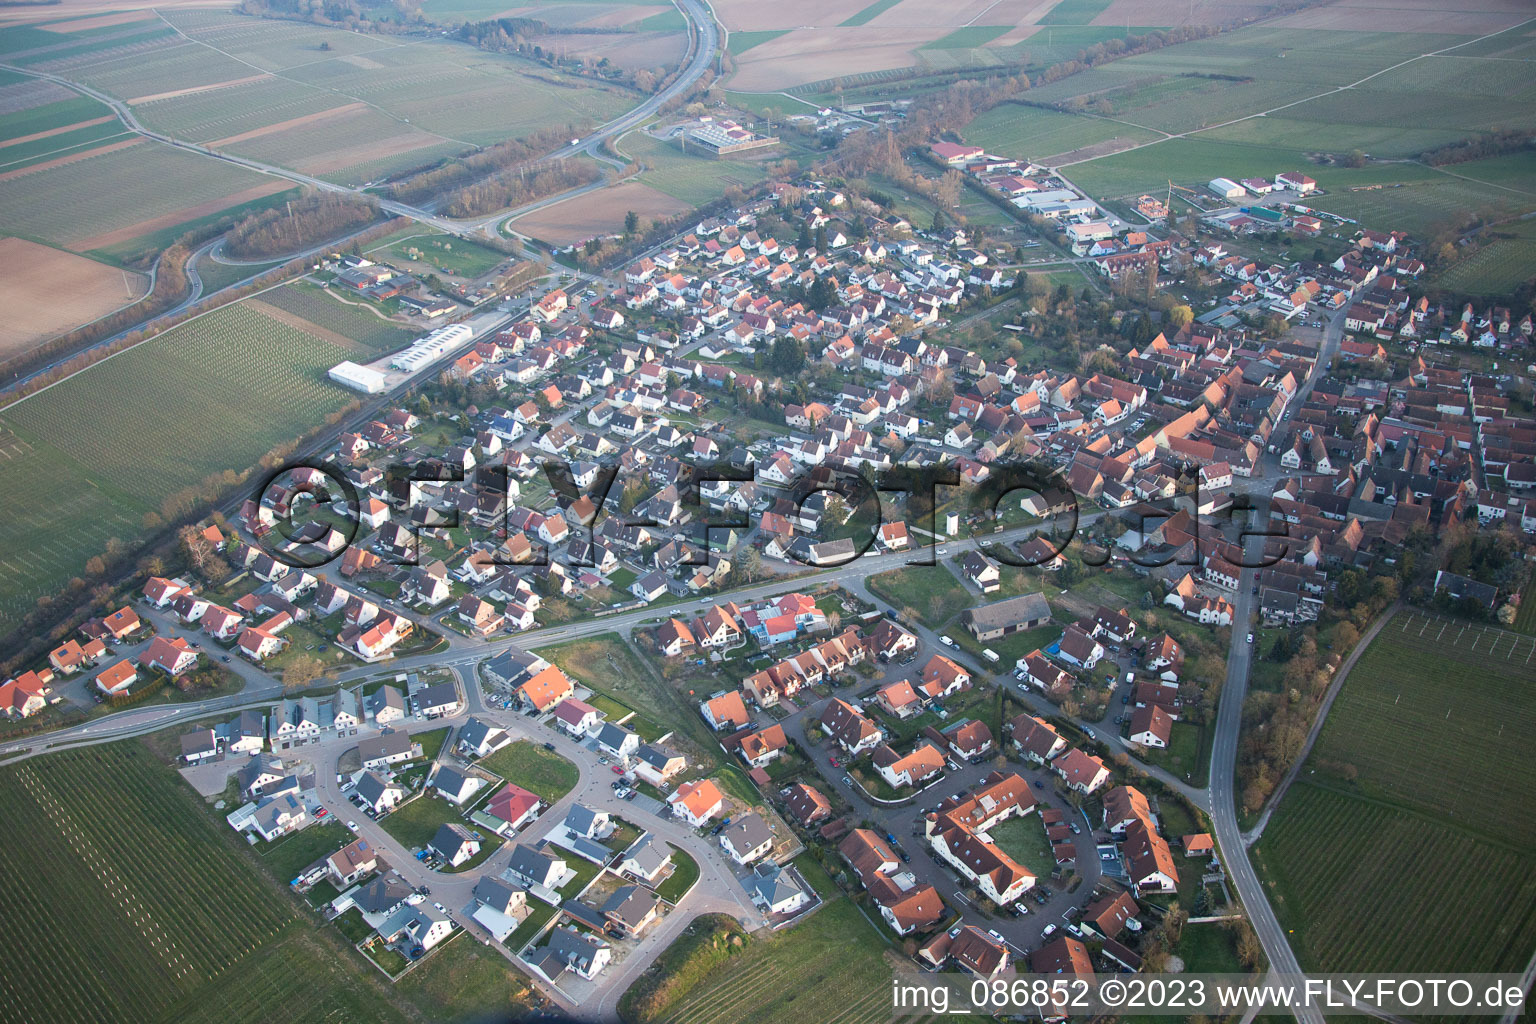 Bird's eye view of Insheim in the state Rhineland-Palatinate, Germany